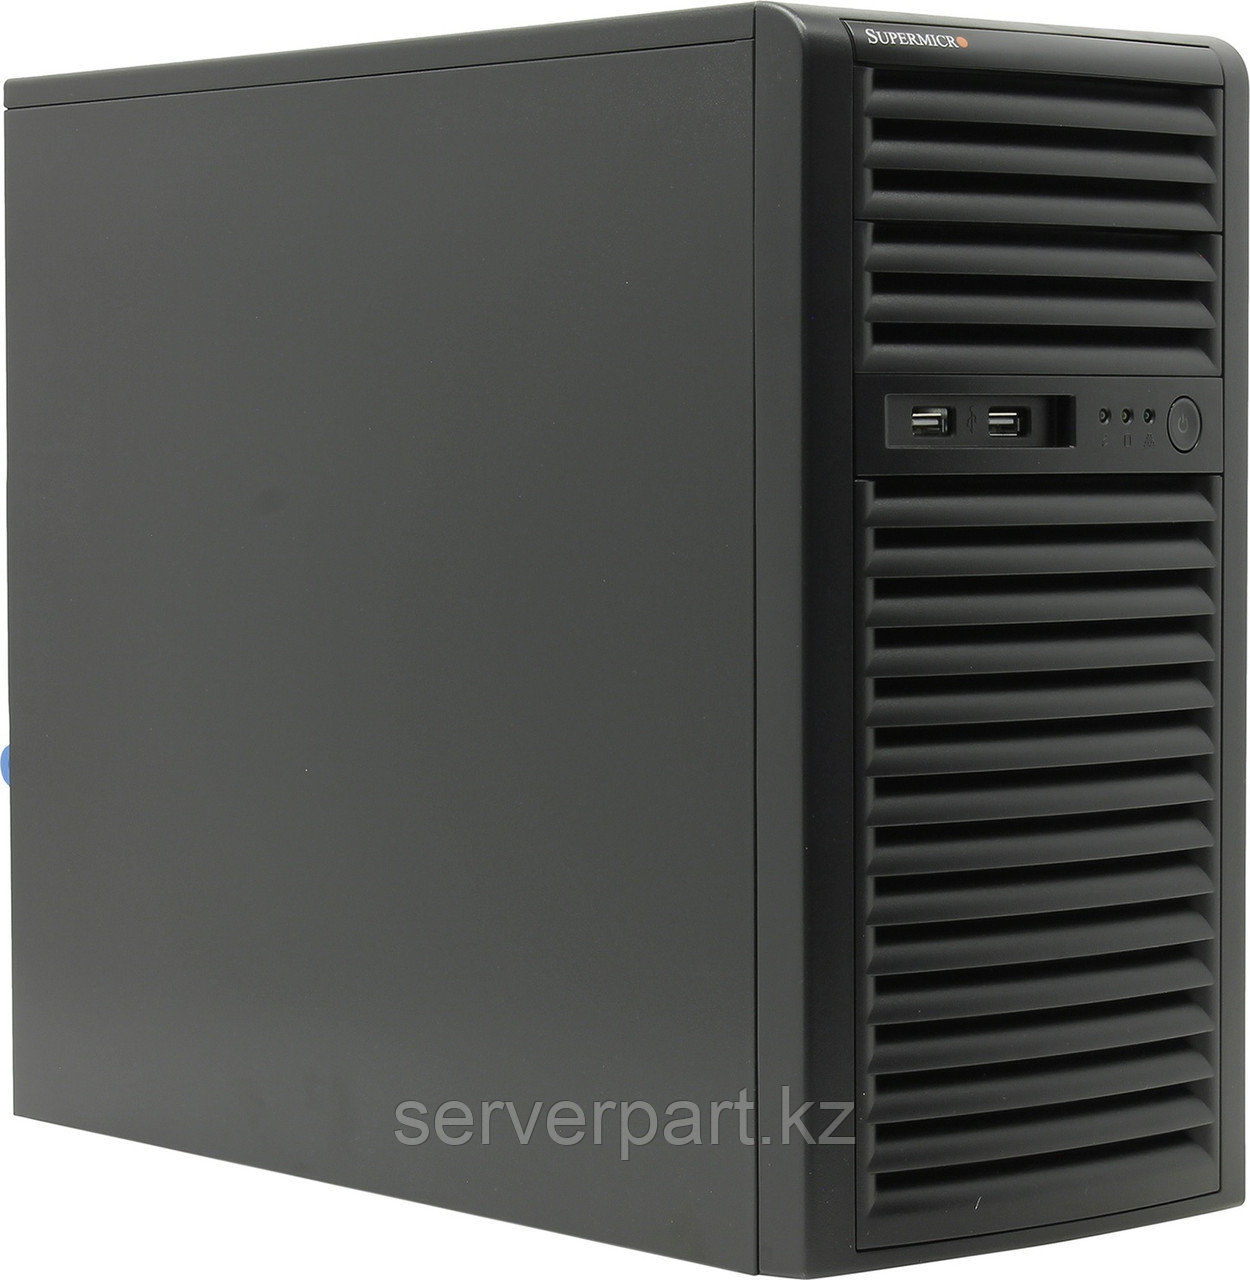 Сервер Supermicro SYS-5039D Tower/4-core intel xeon E3-1220v6 3GHz/64GB EUDIMM/1x480GB SSD MU Hyb, фото 1